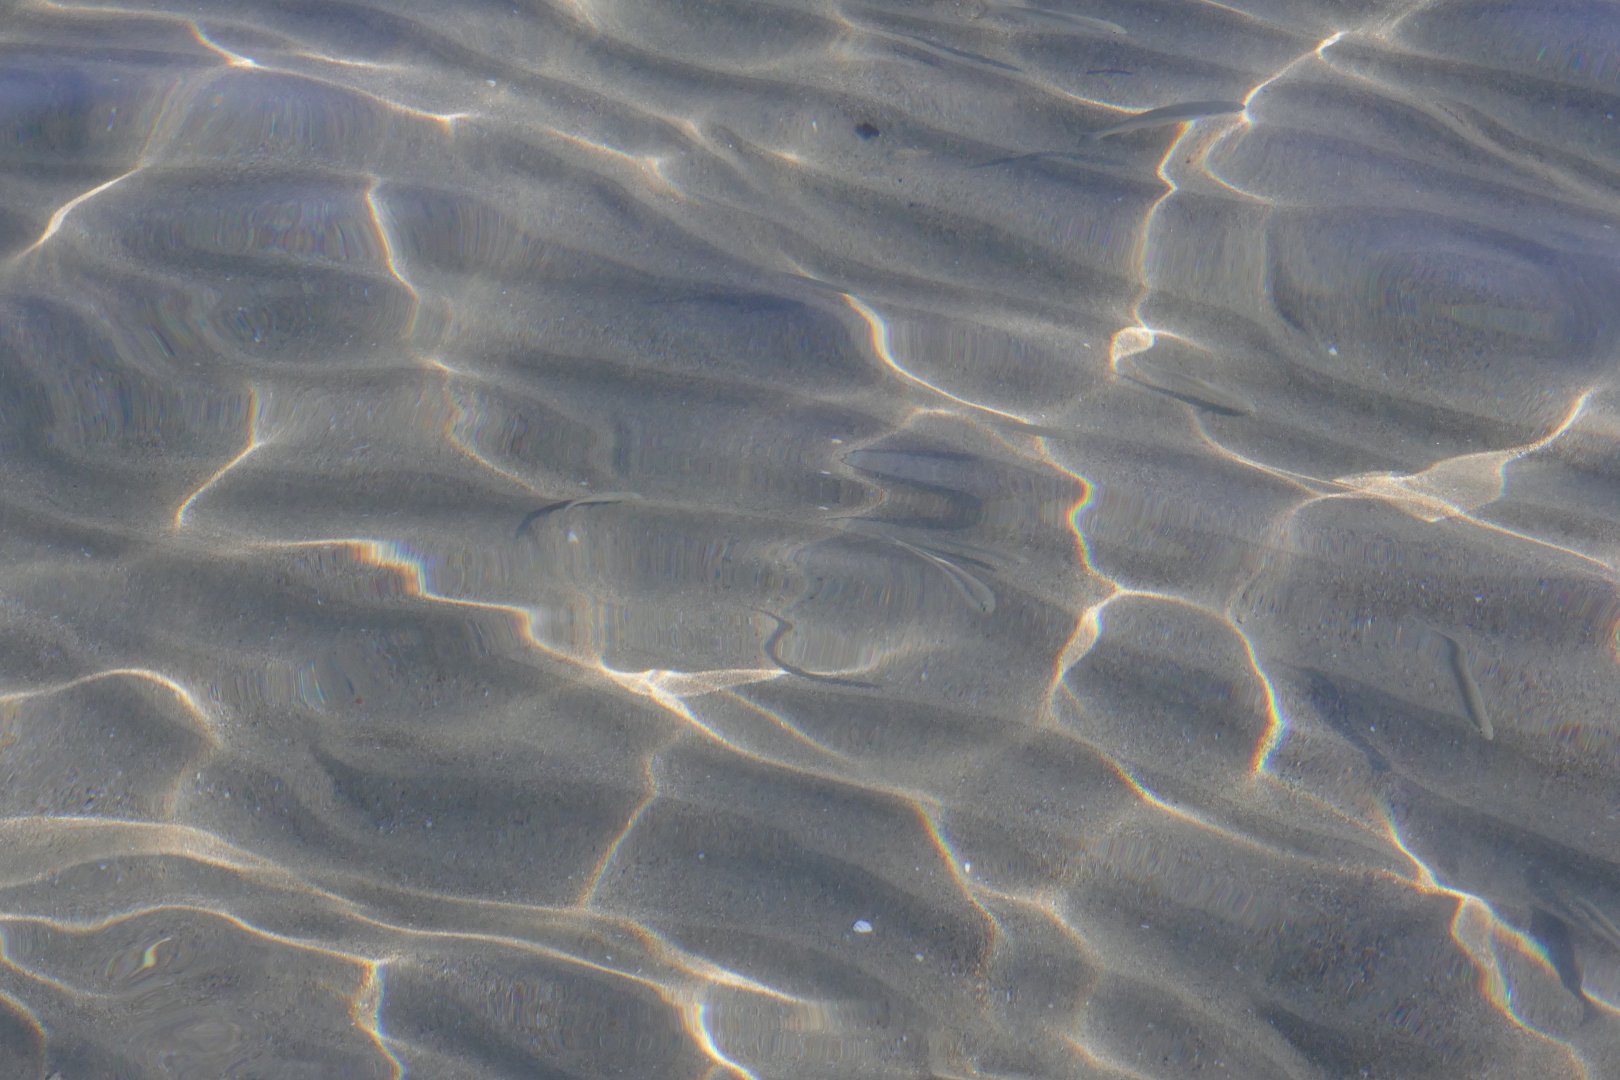 Just clear water in the sun - and fish - Kalamaki beach, Zante